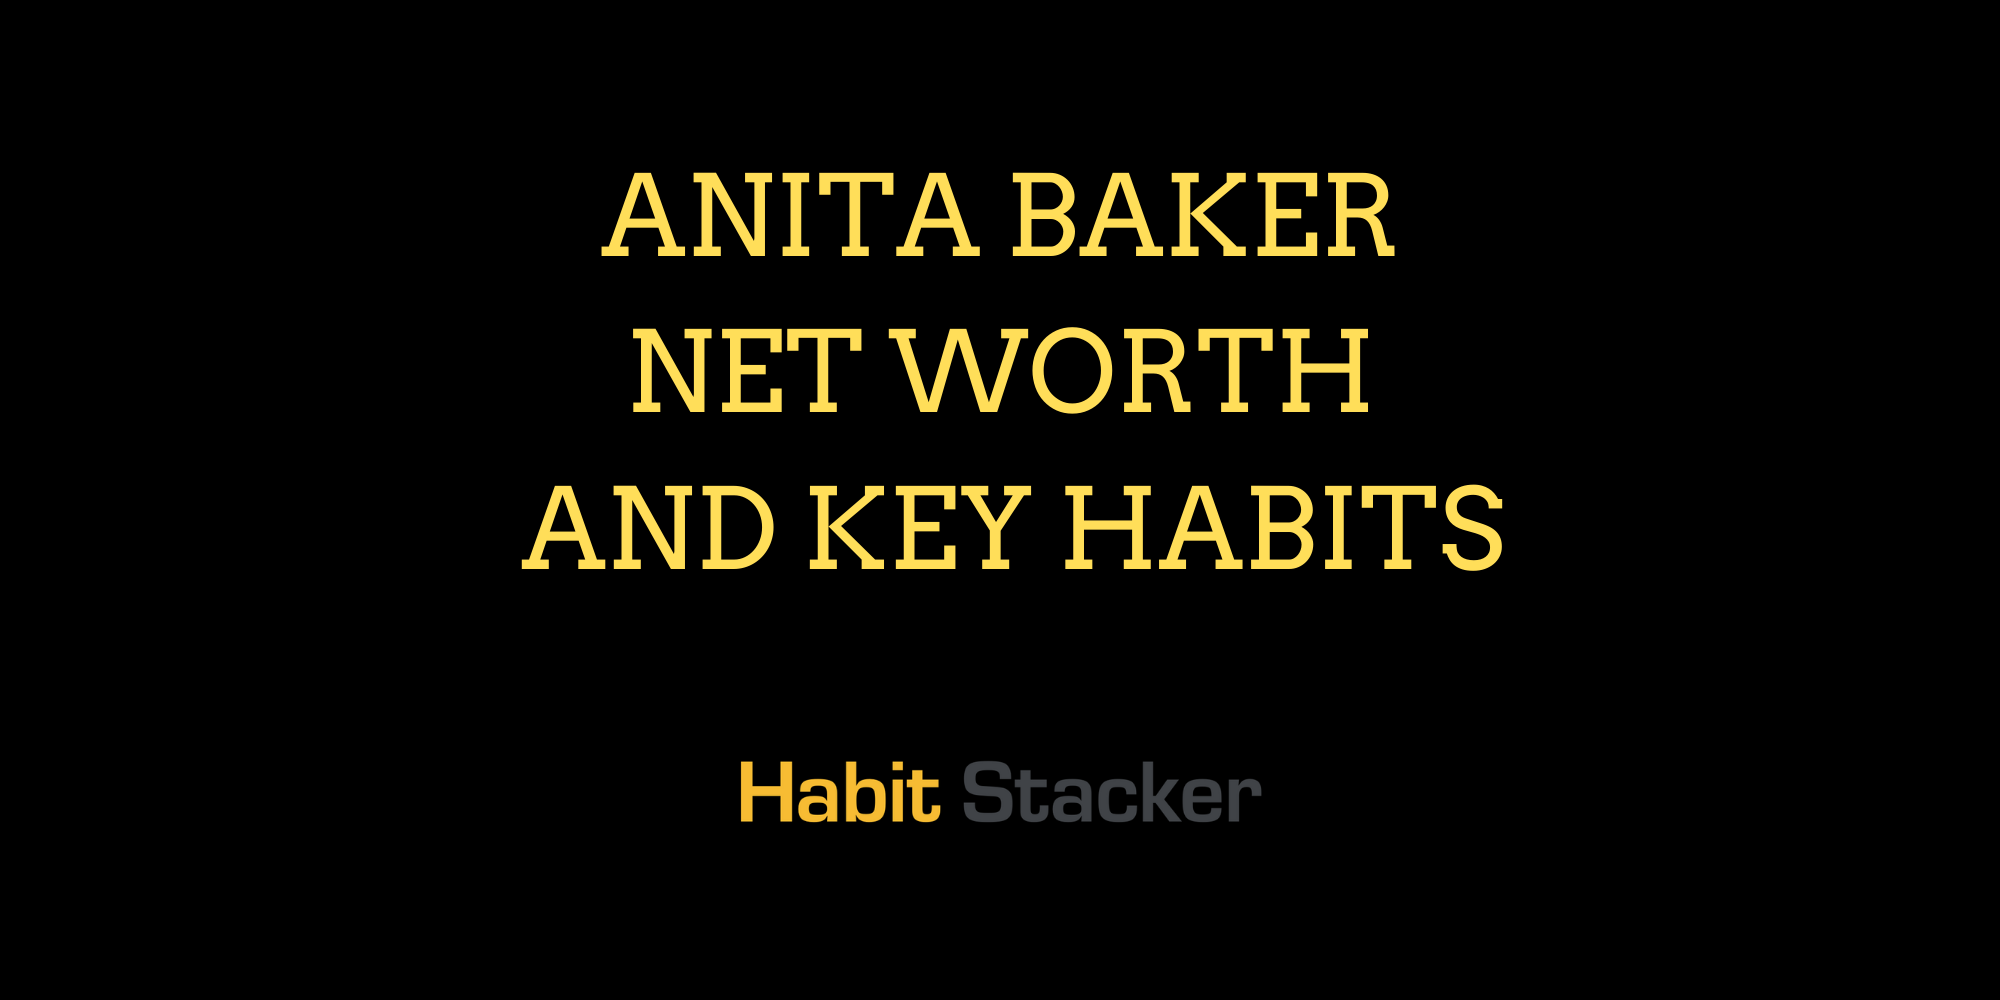 Anita Baker Net Worth and Key Habits